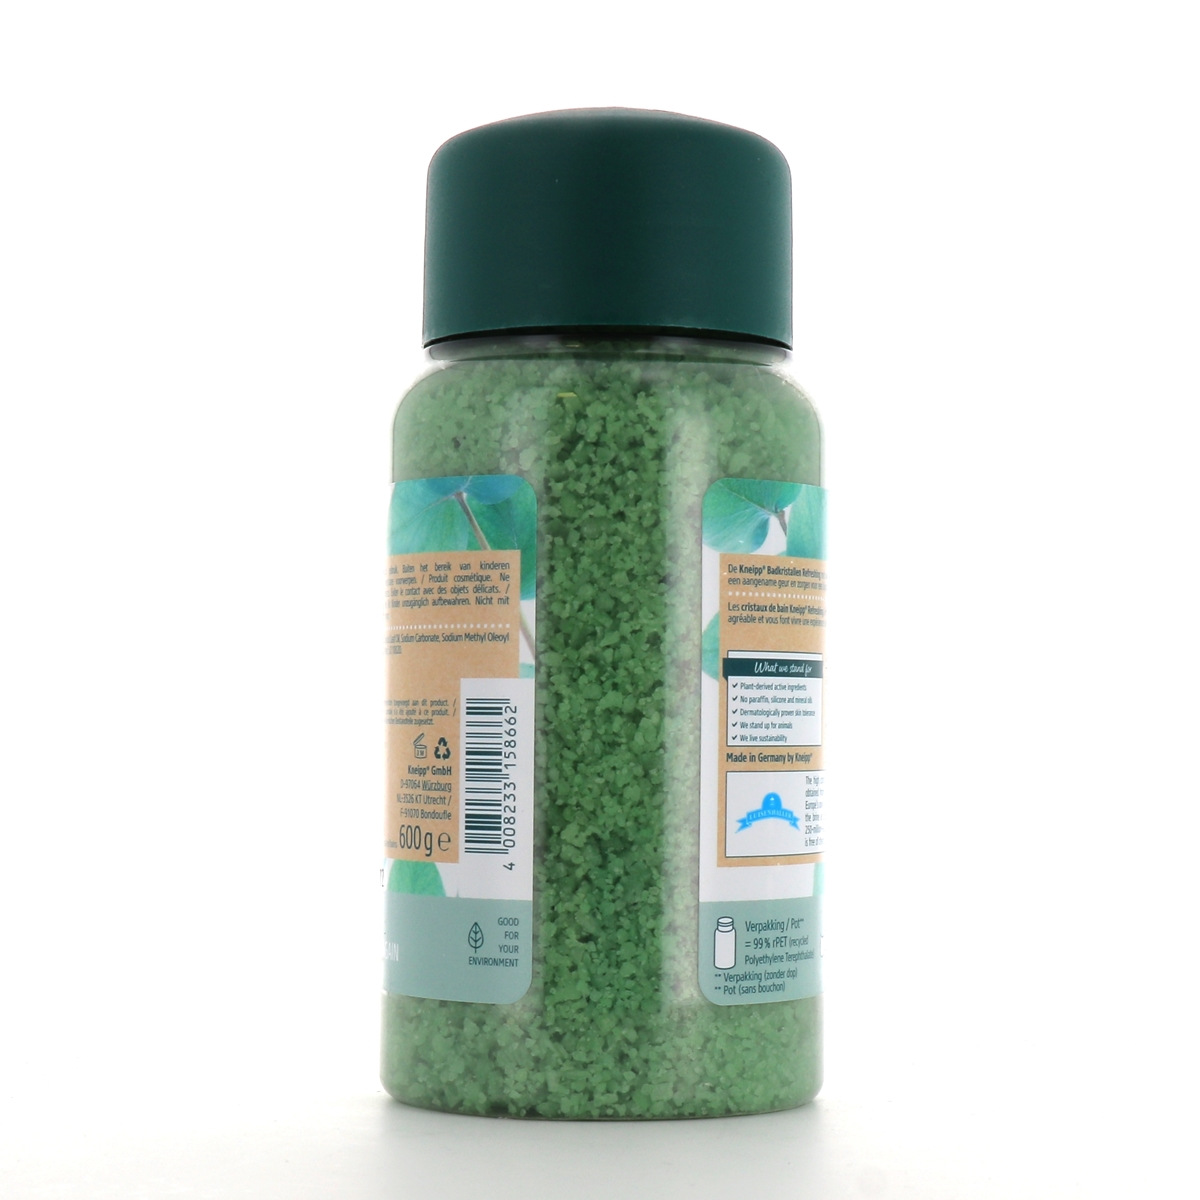 KNEIPP Refreshing - Cristaux de sel pour le bain Eucalyptus 600gr -  Parapharmacie Prado Mermoz